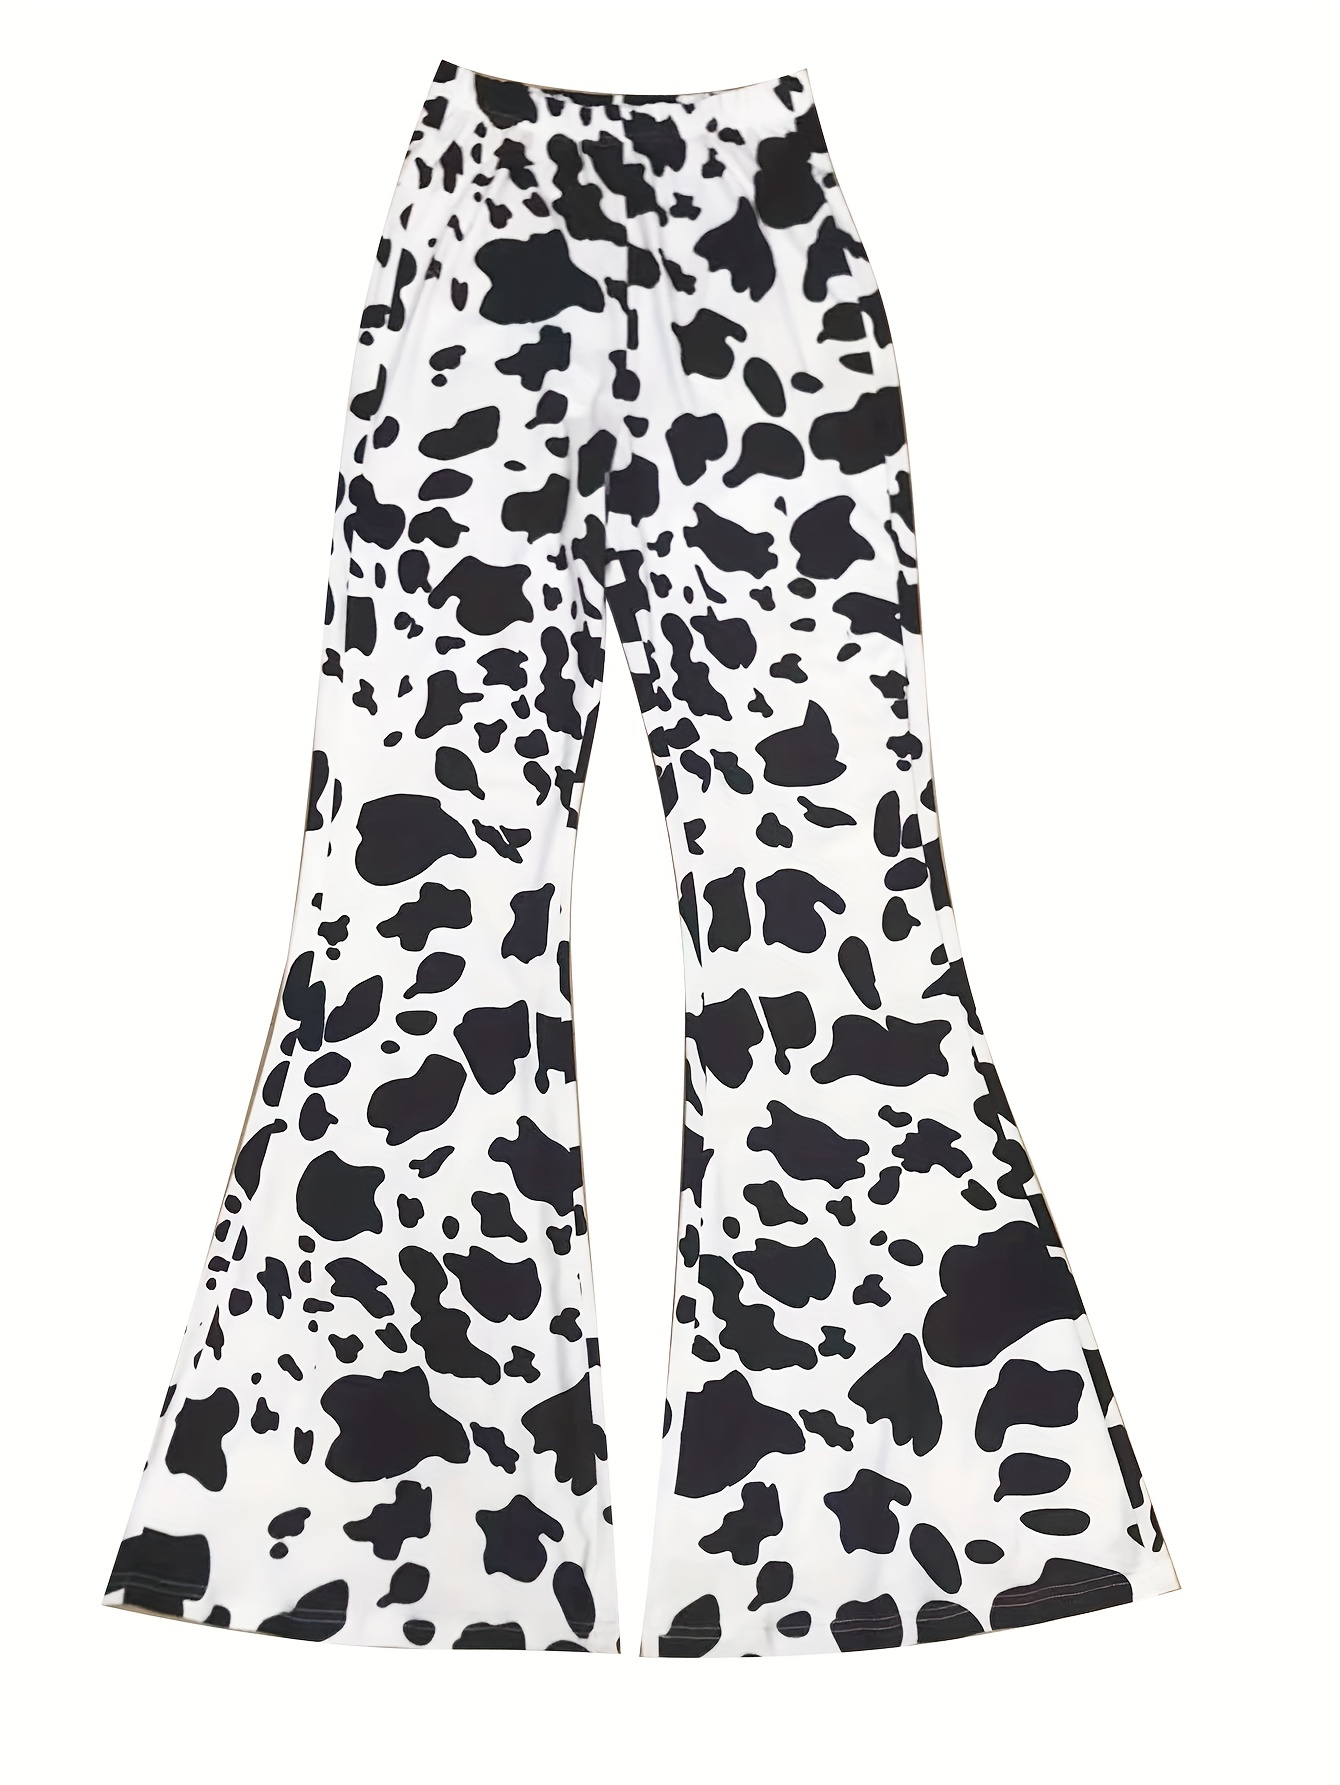 Casual & Comfy Loose Pajamas Set, Cute Cow Print Short Sleeve Tee Top & Cow  Spots Pants, Women's Sleepwear & Loungewear